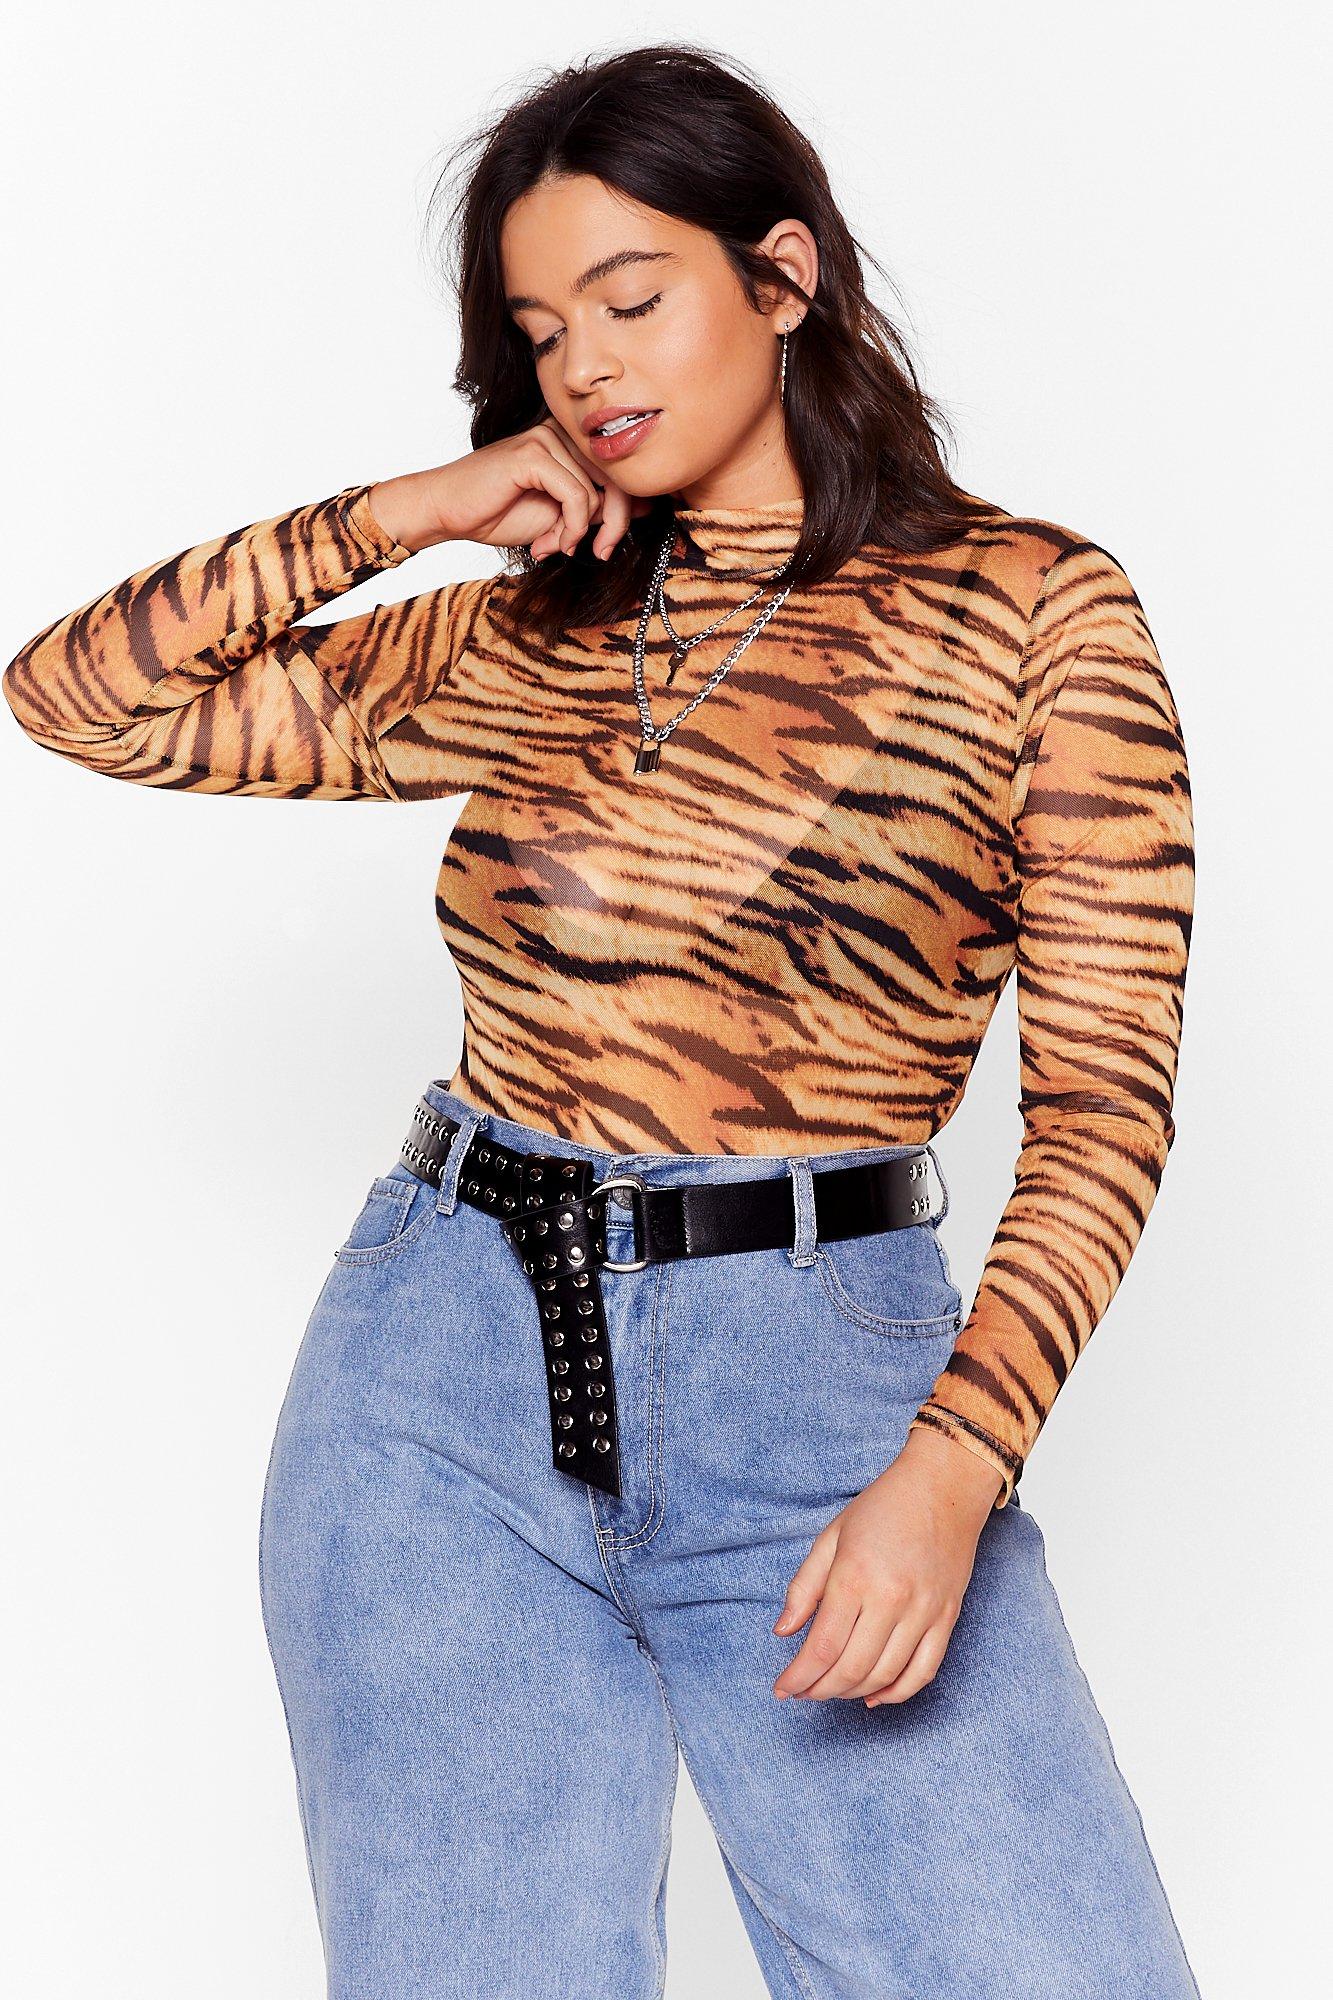 tiger print bodysuit